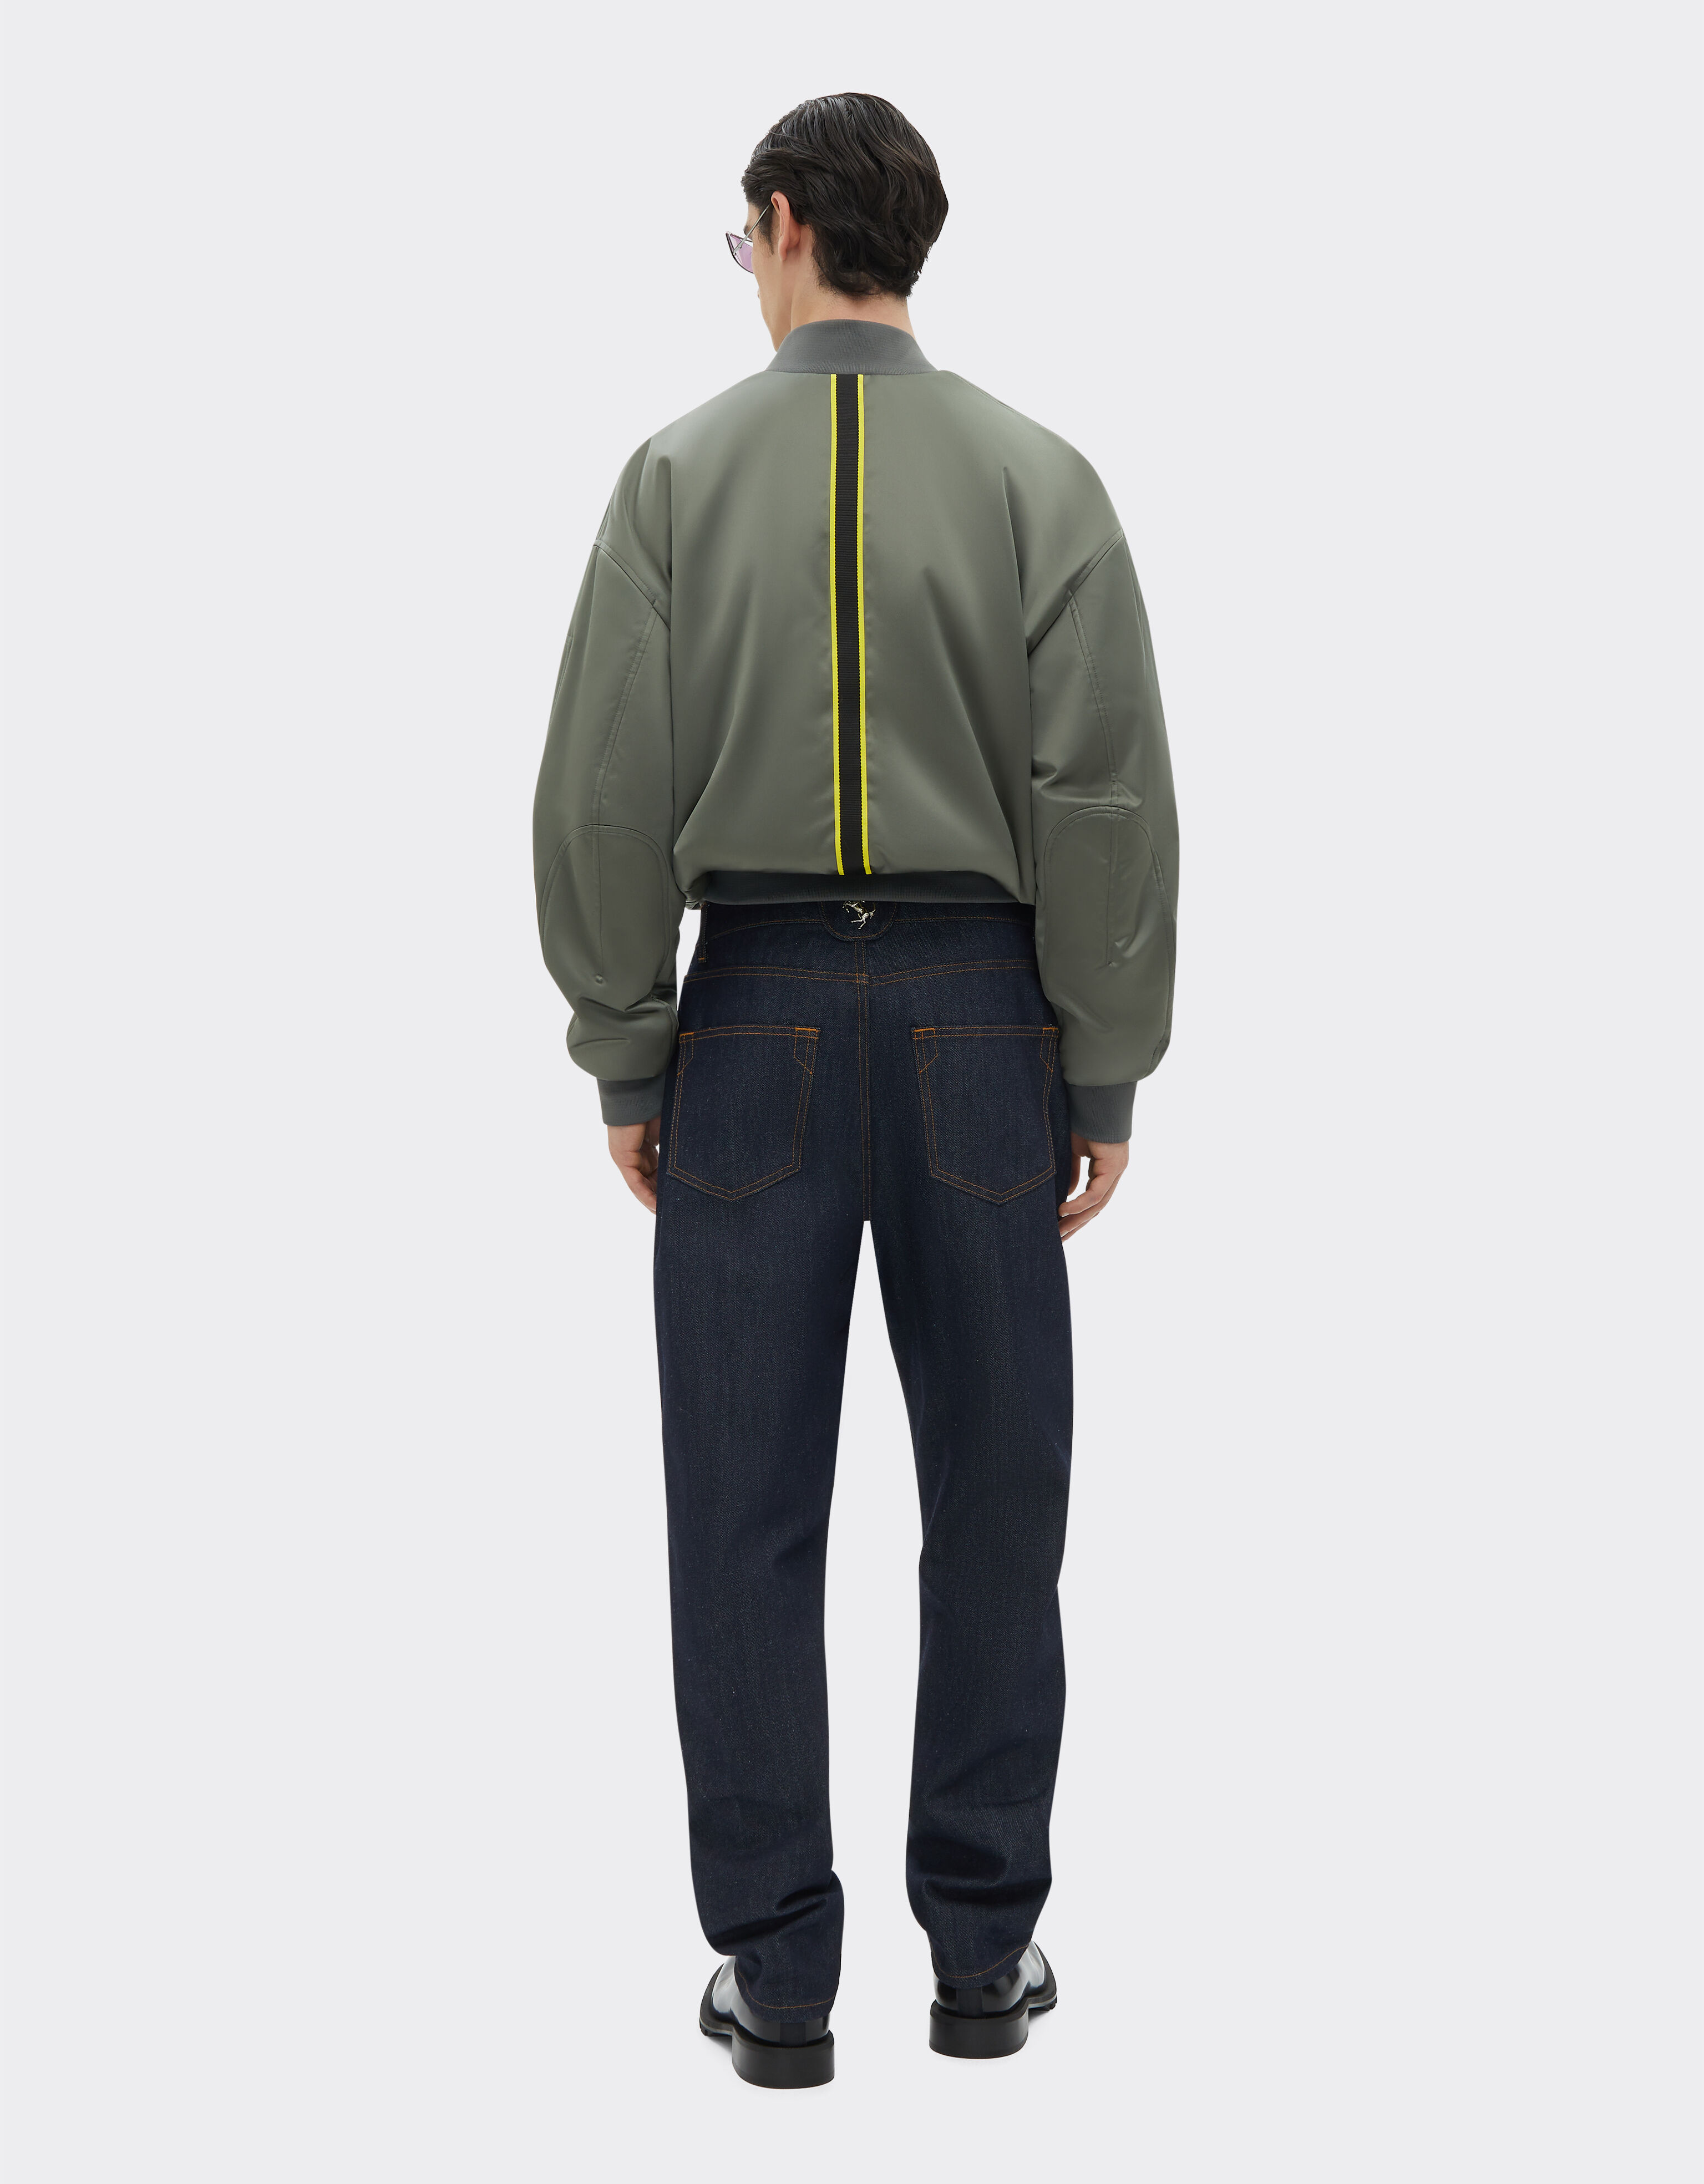 Ferrari Bomber jacket in eco-nylon fabric Ingrid 20531f